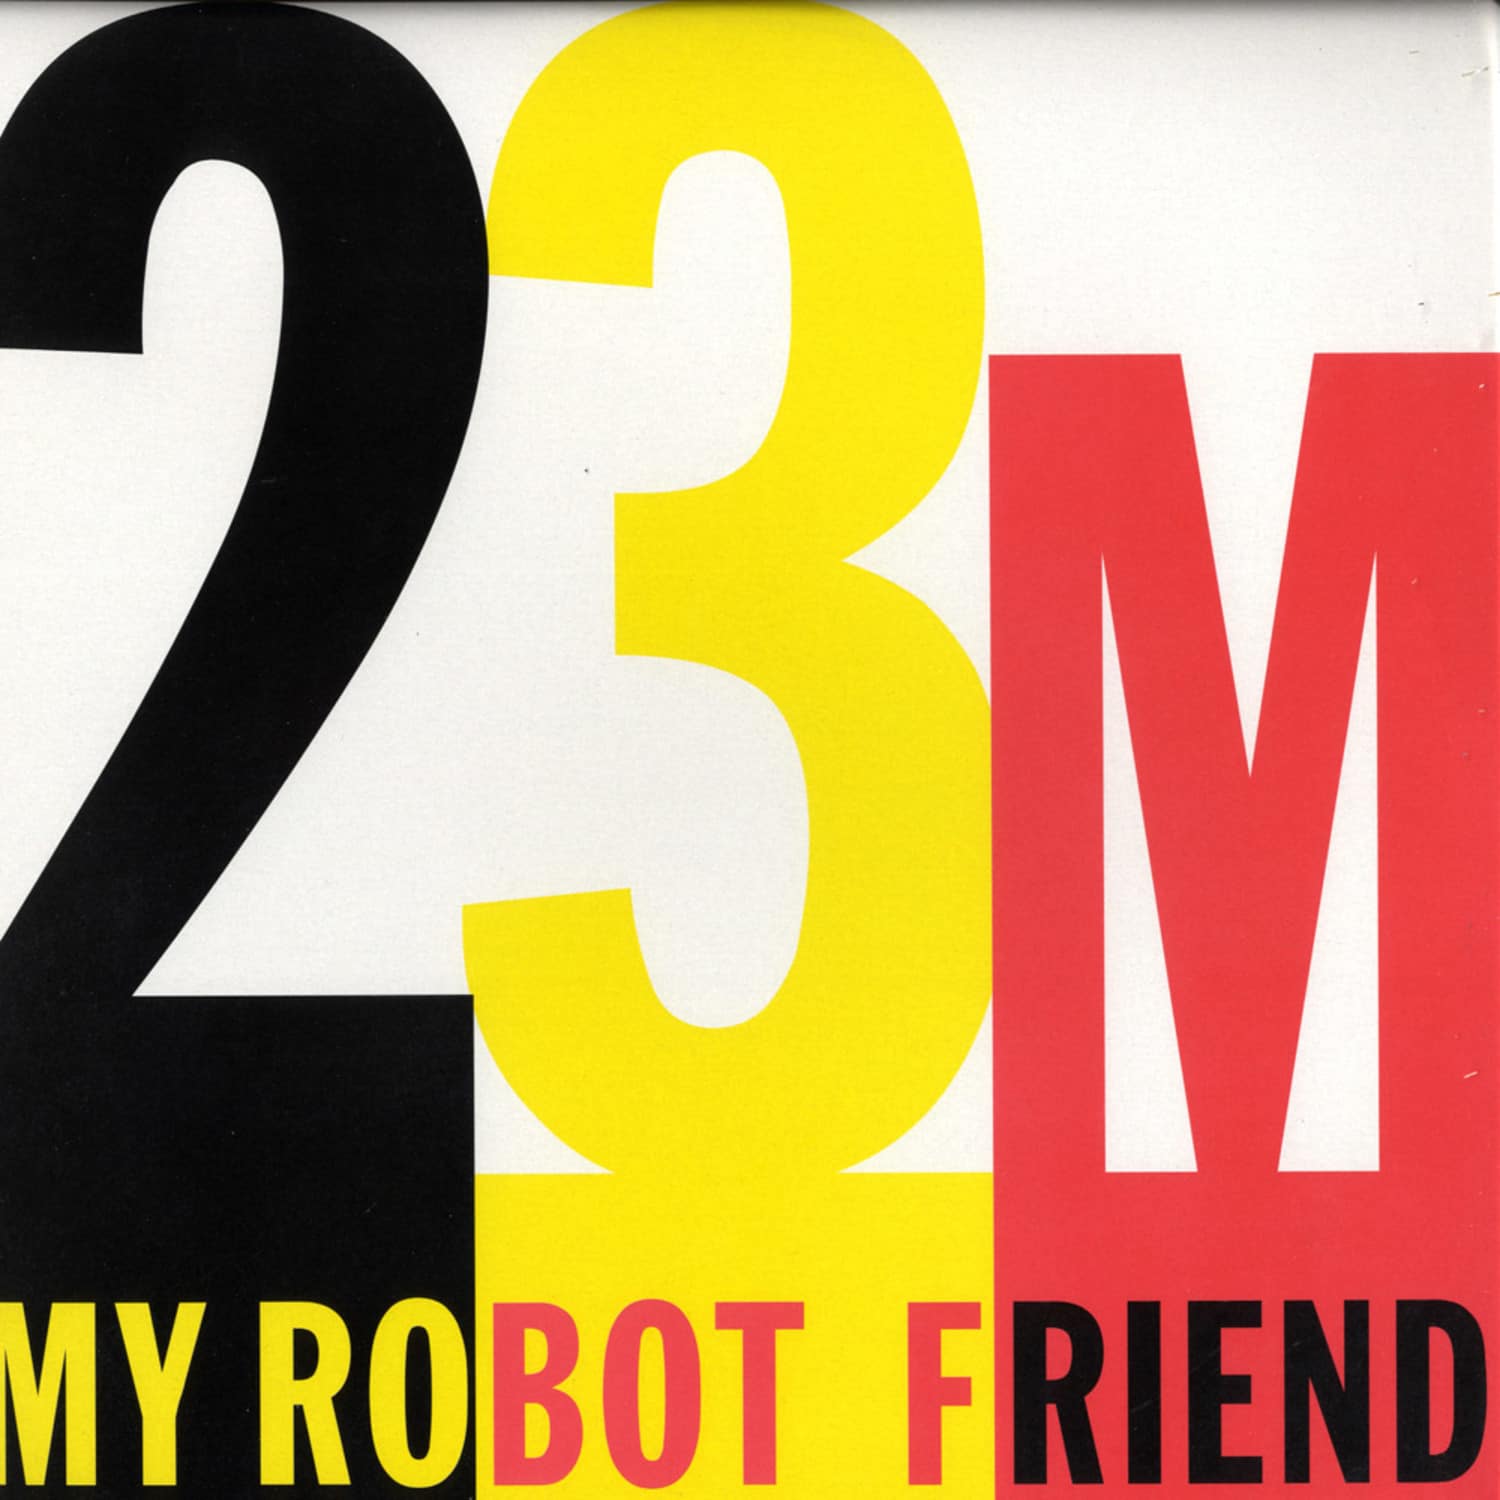 My Robot Friend - 23 MINUTES